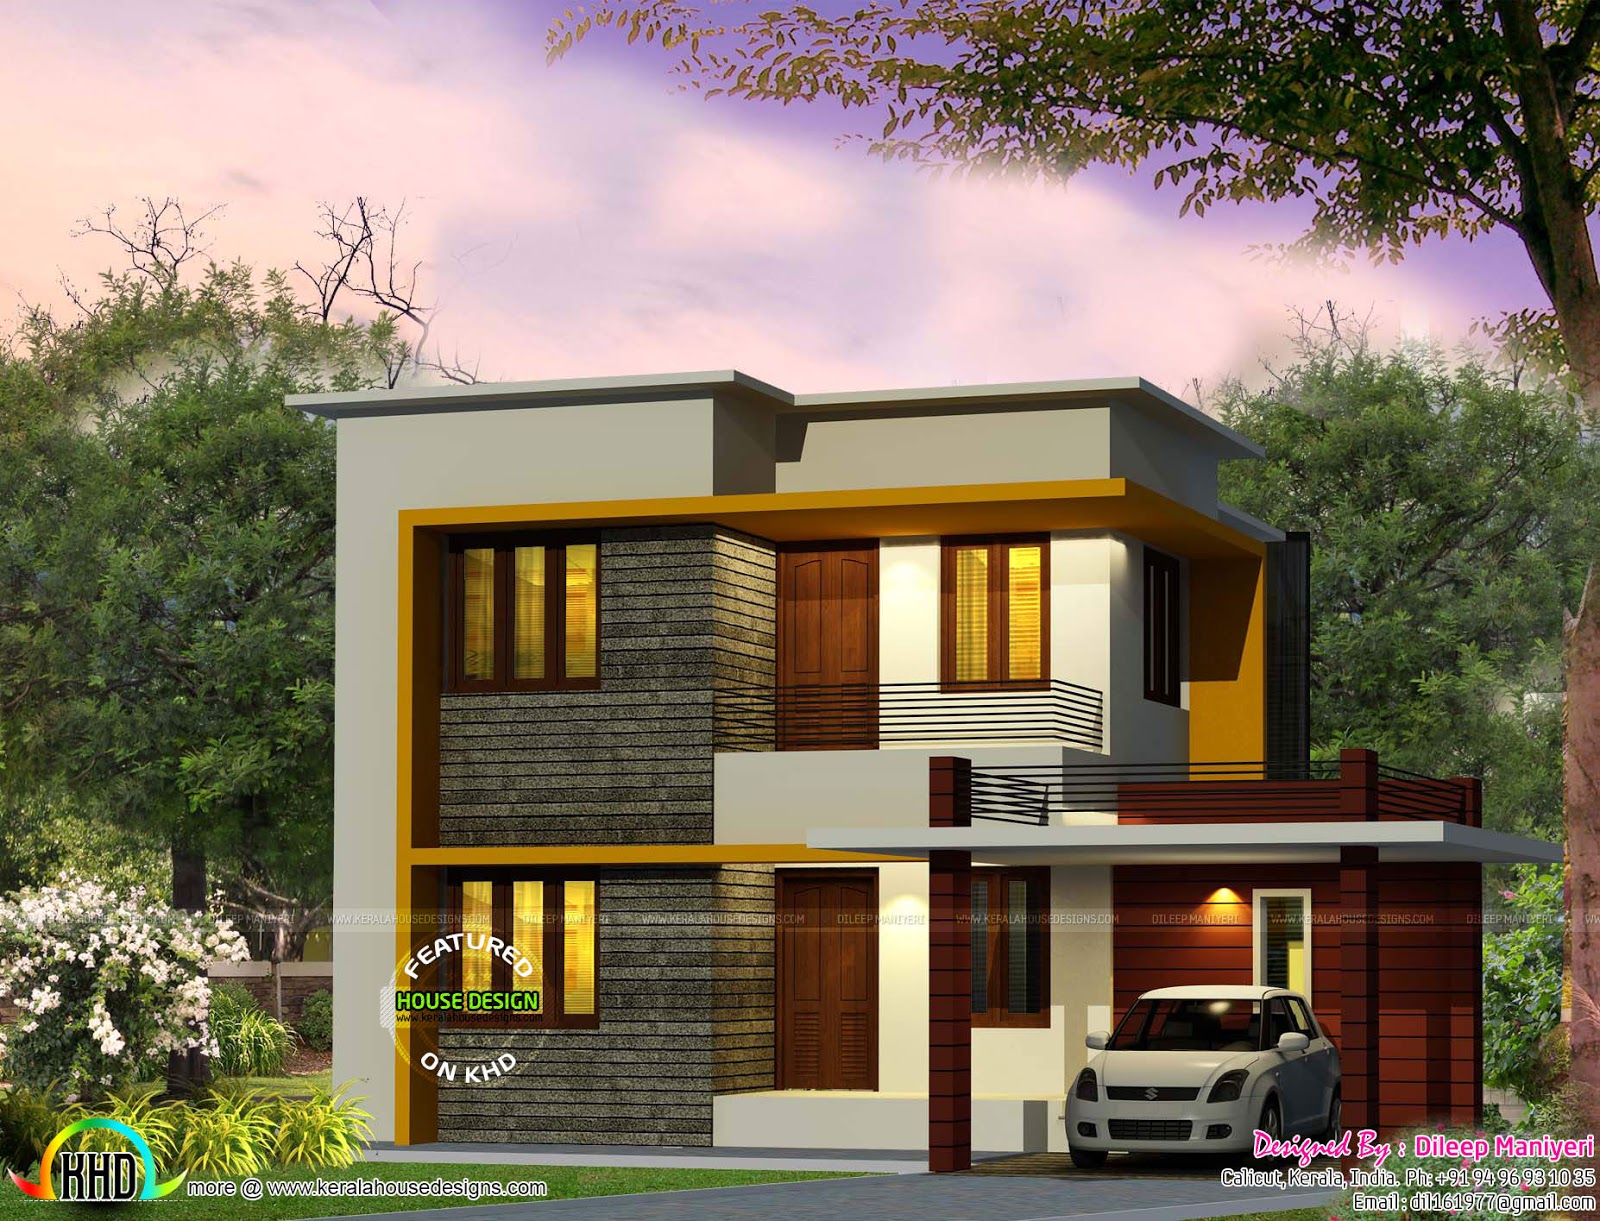 Cute 4  bedroom  modern  house  1670 sq ft Kerala home  